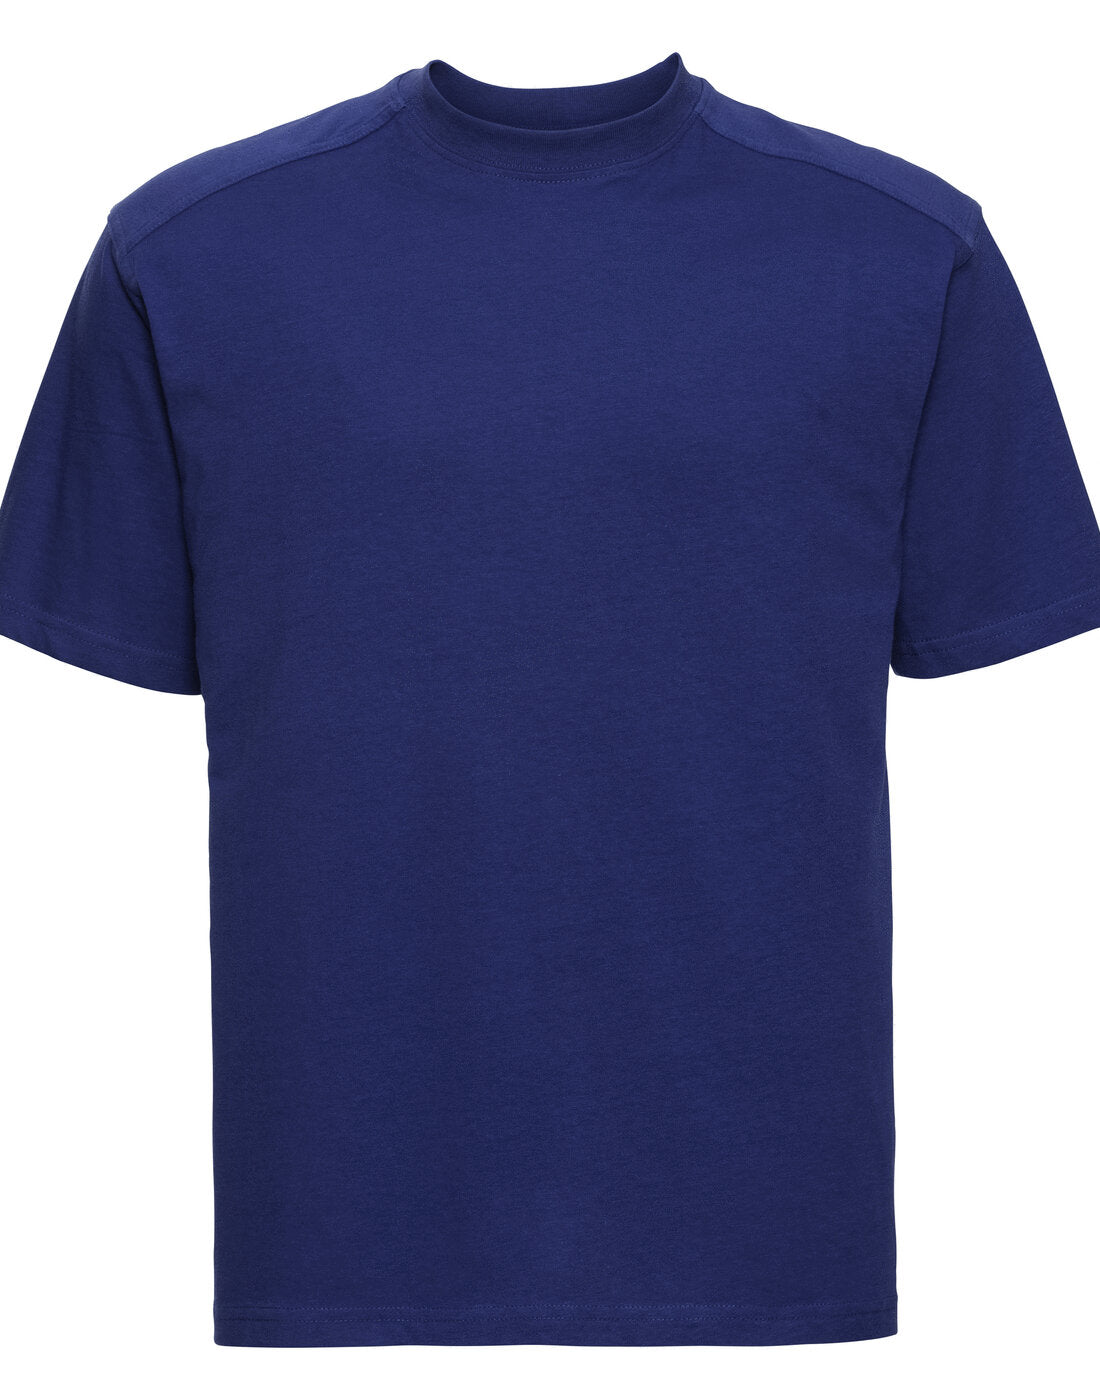 Russell Heavy Duty Workwear T-Shirt - Bright Royal Blue